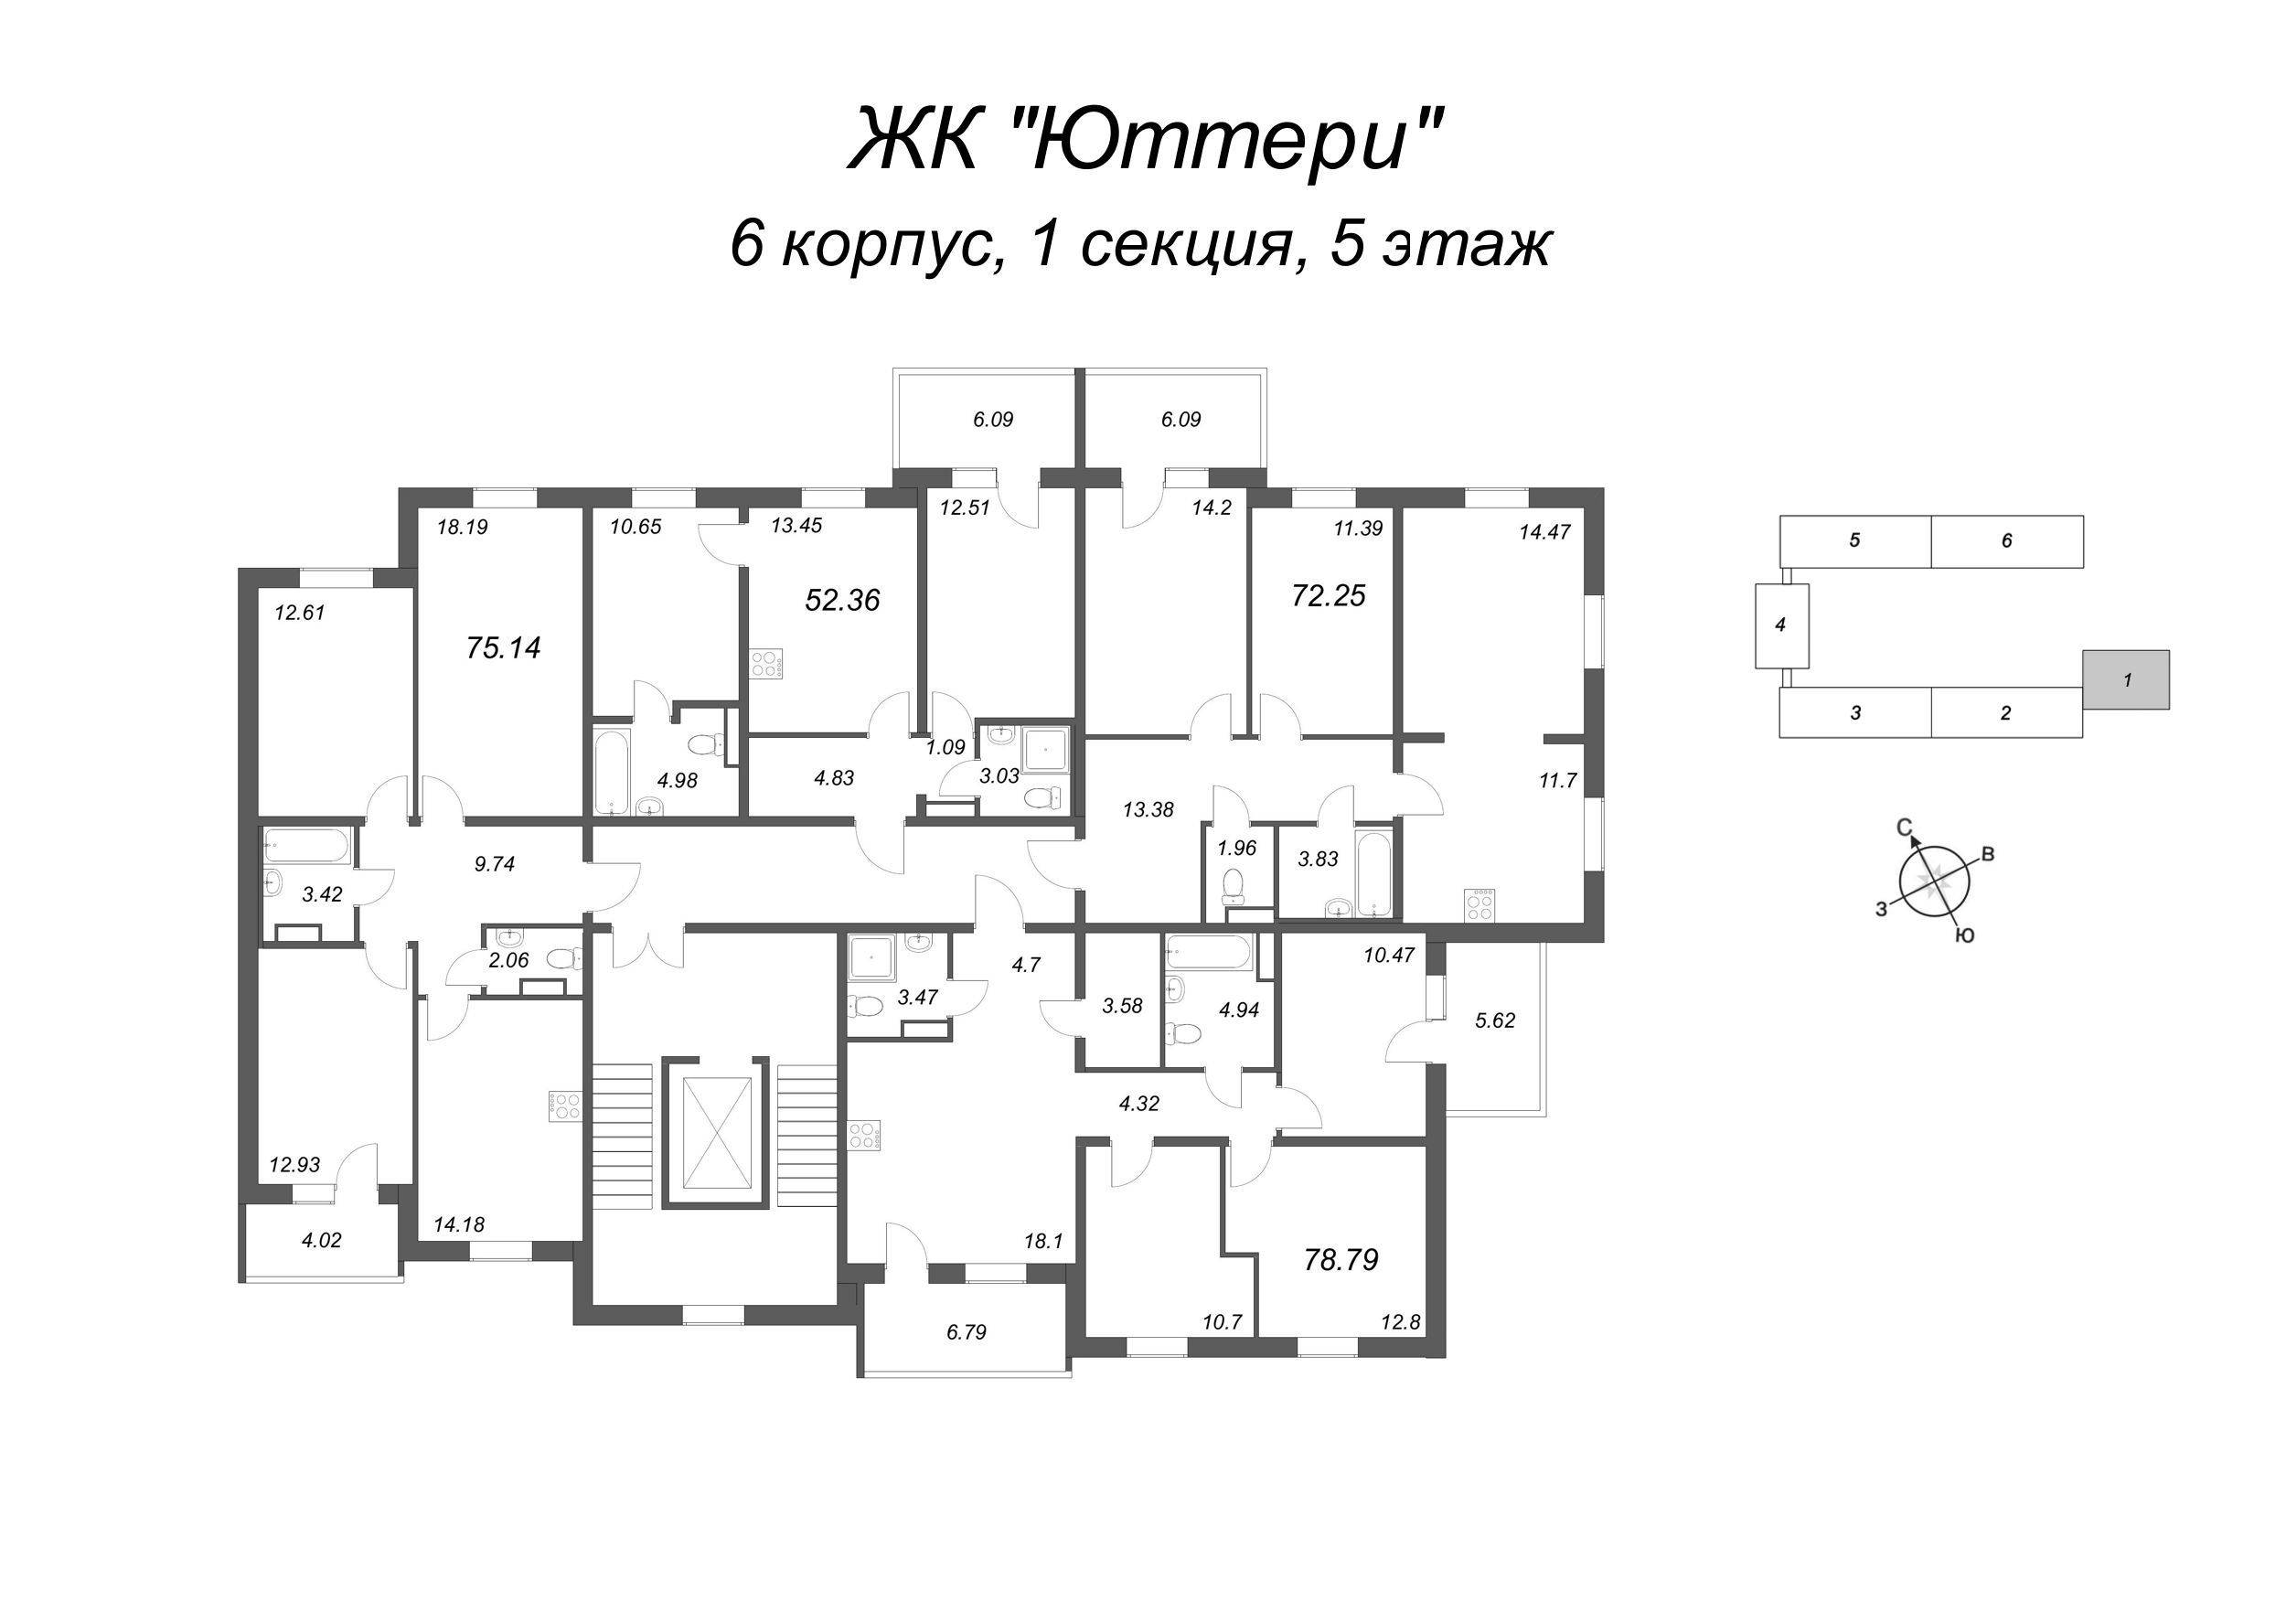 4-комнатная (Евро) квартира, 72.55 м² - планировка этажа